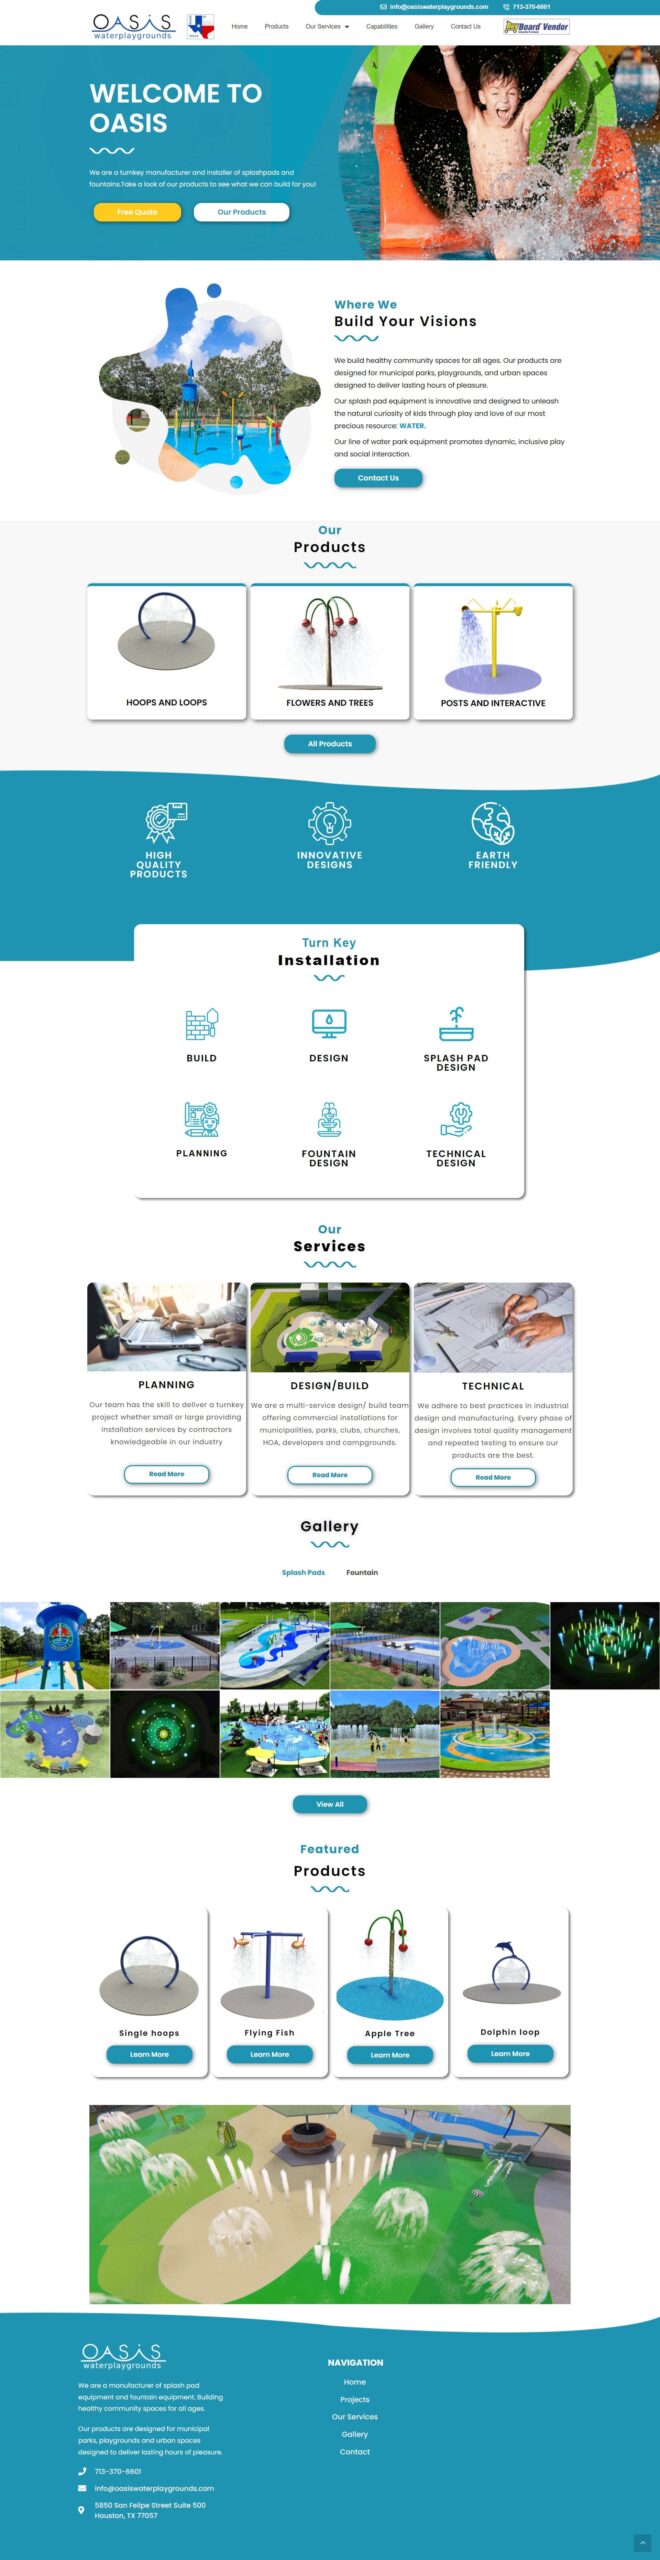 oasis water playgrounds website design portfolio